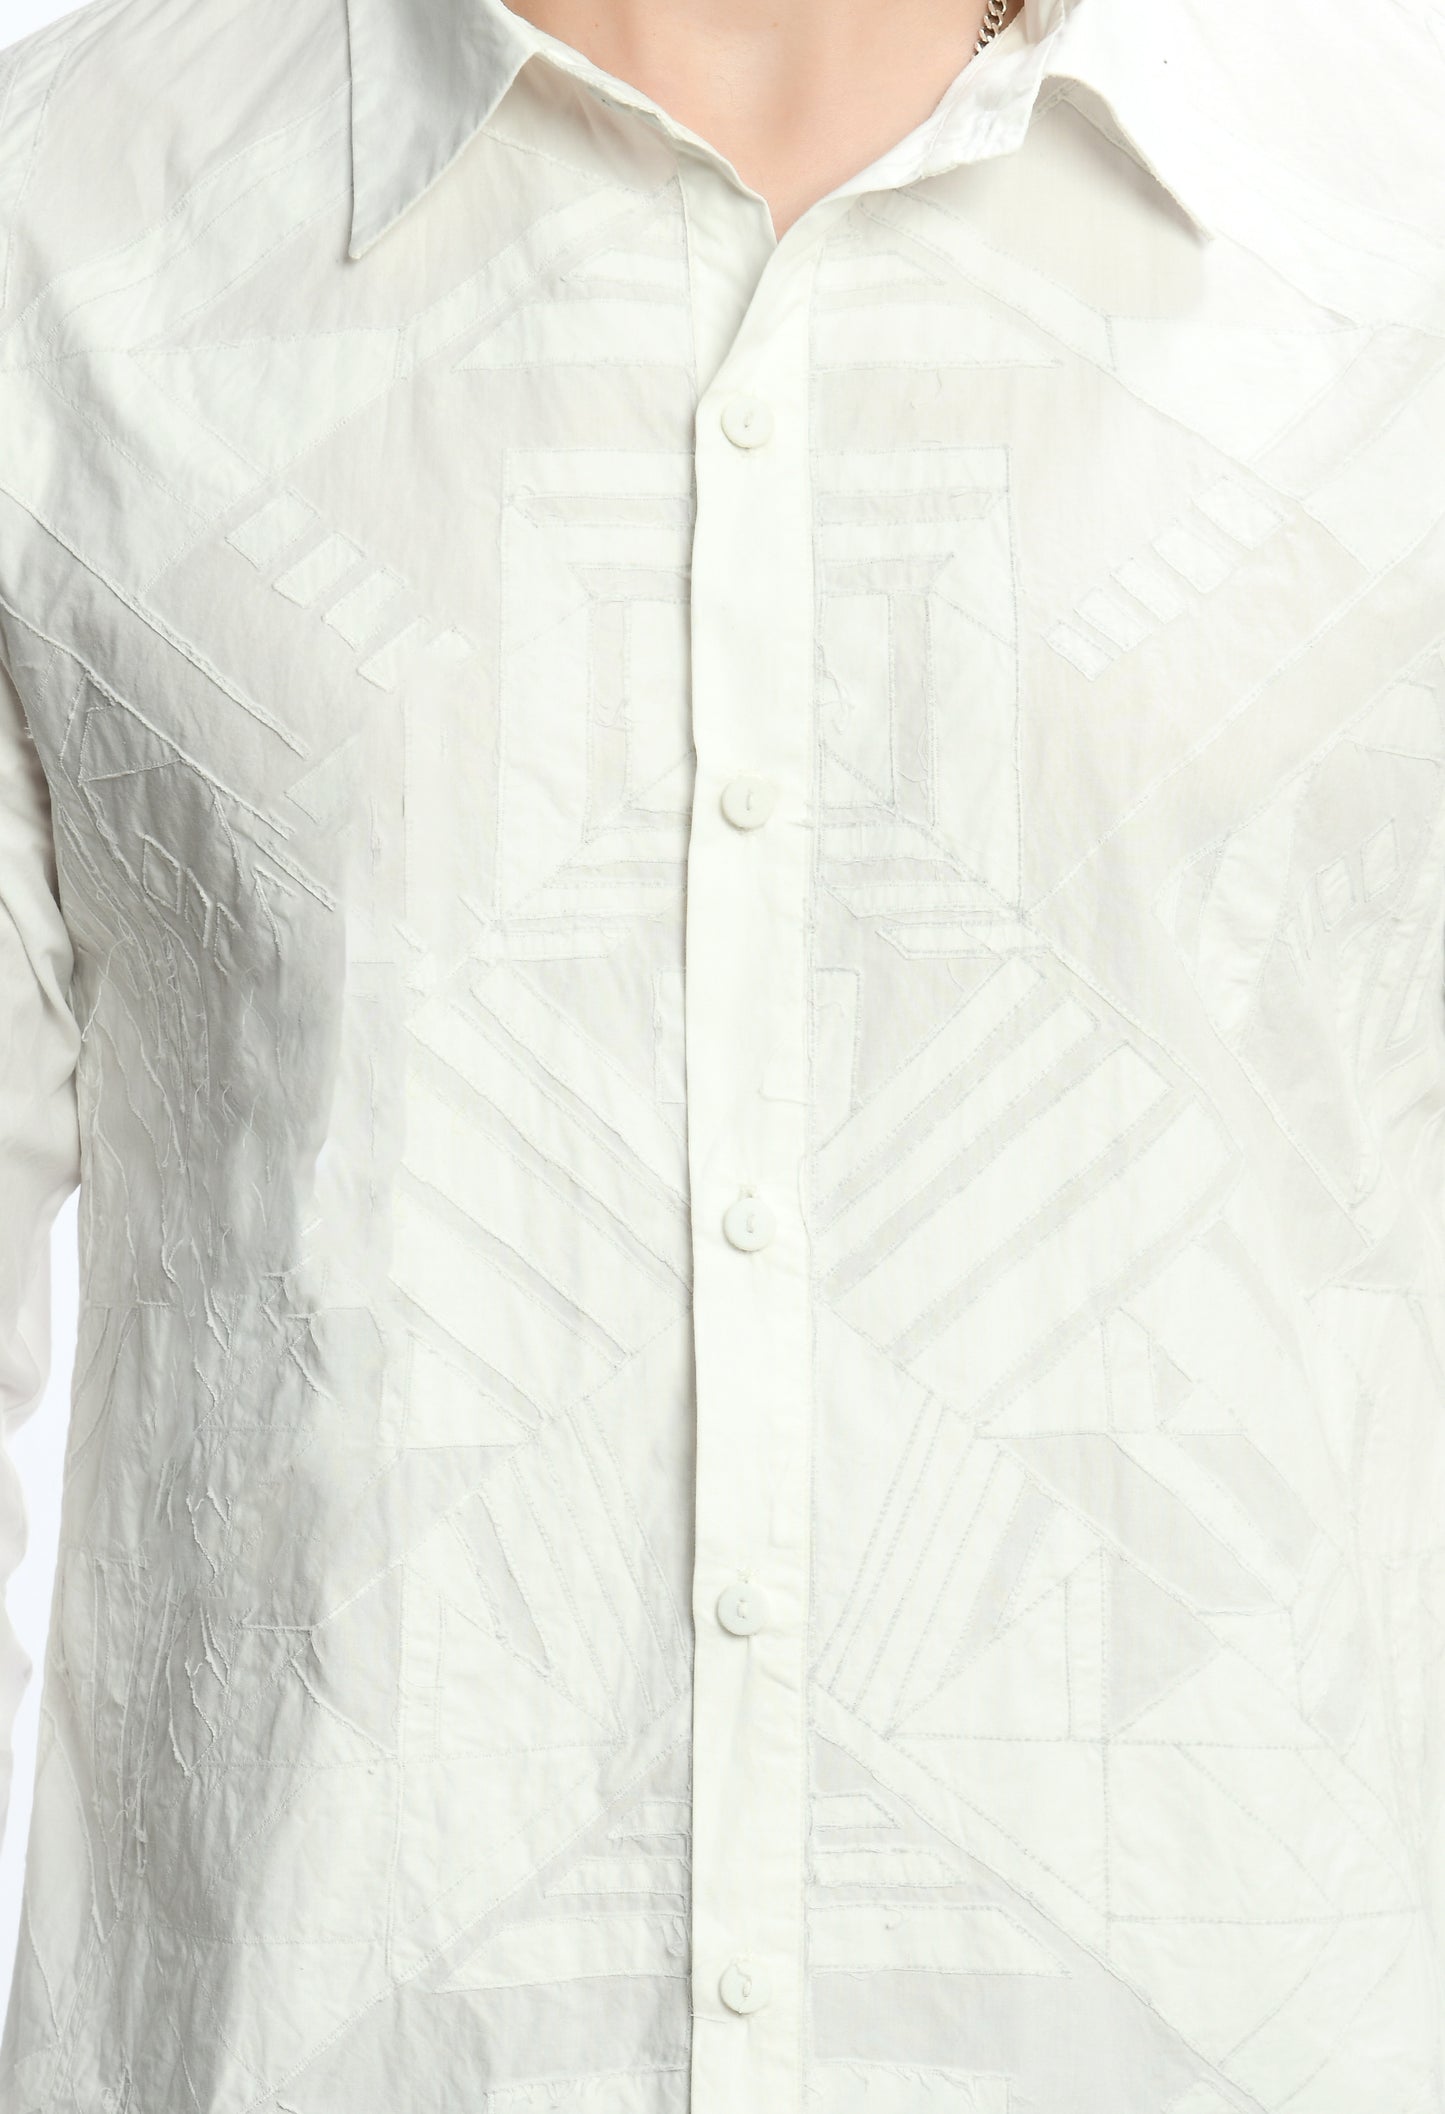 A White cotton shirt showcasing tone on tone appliqué work